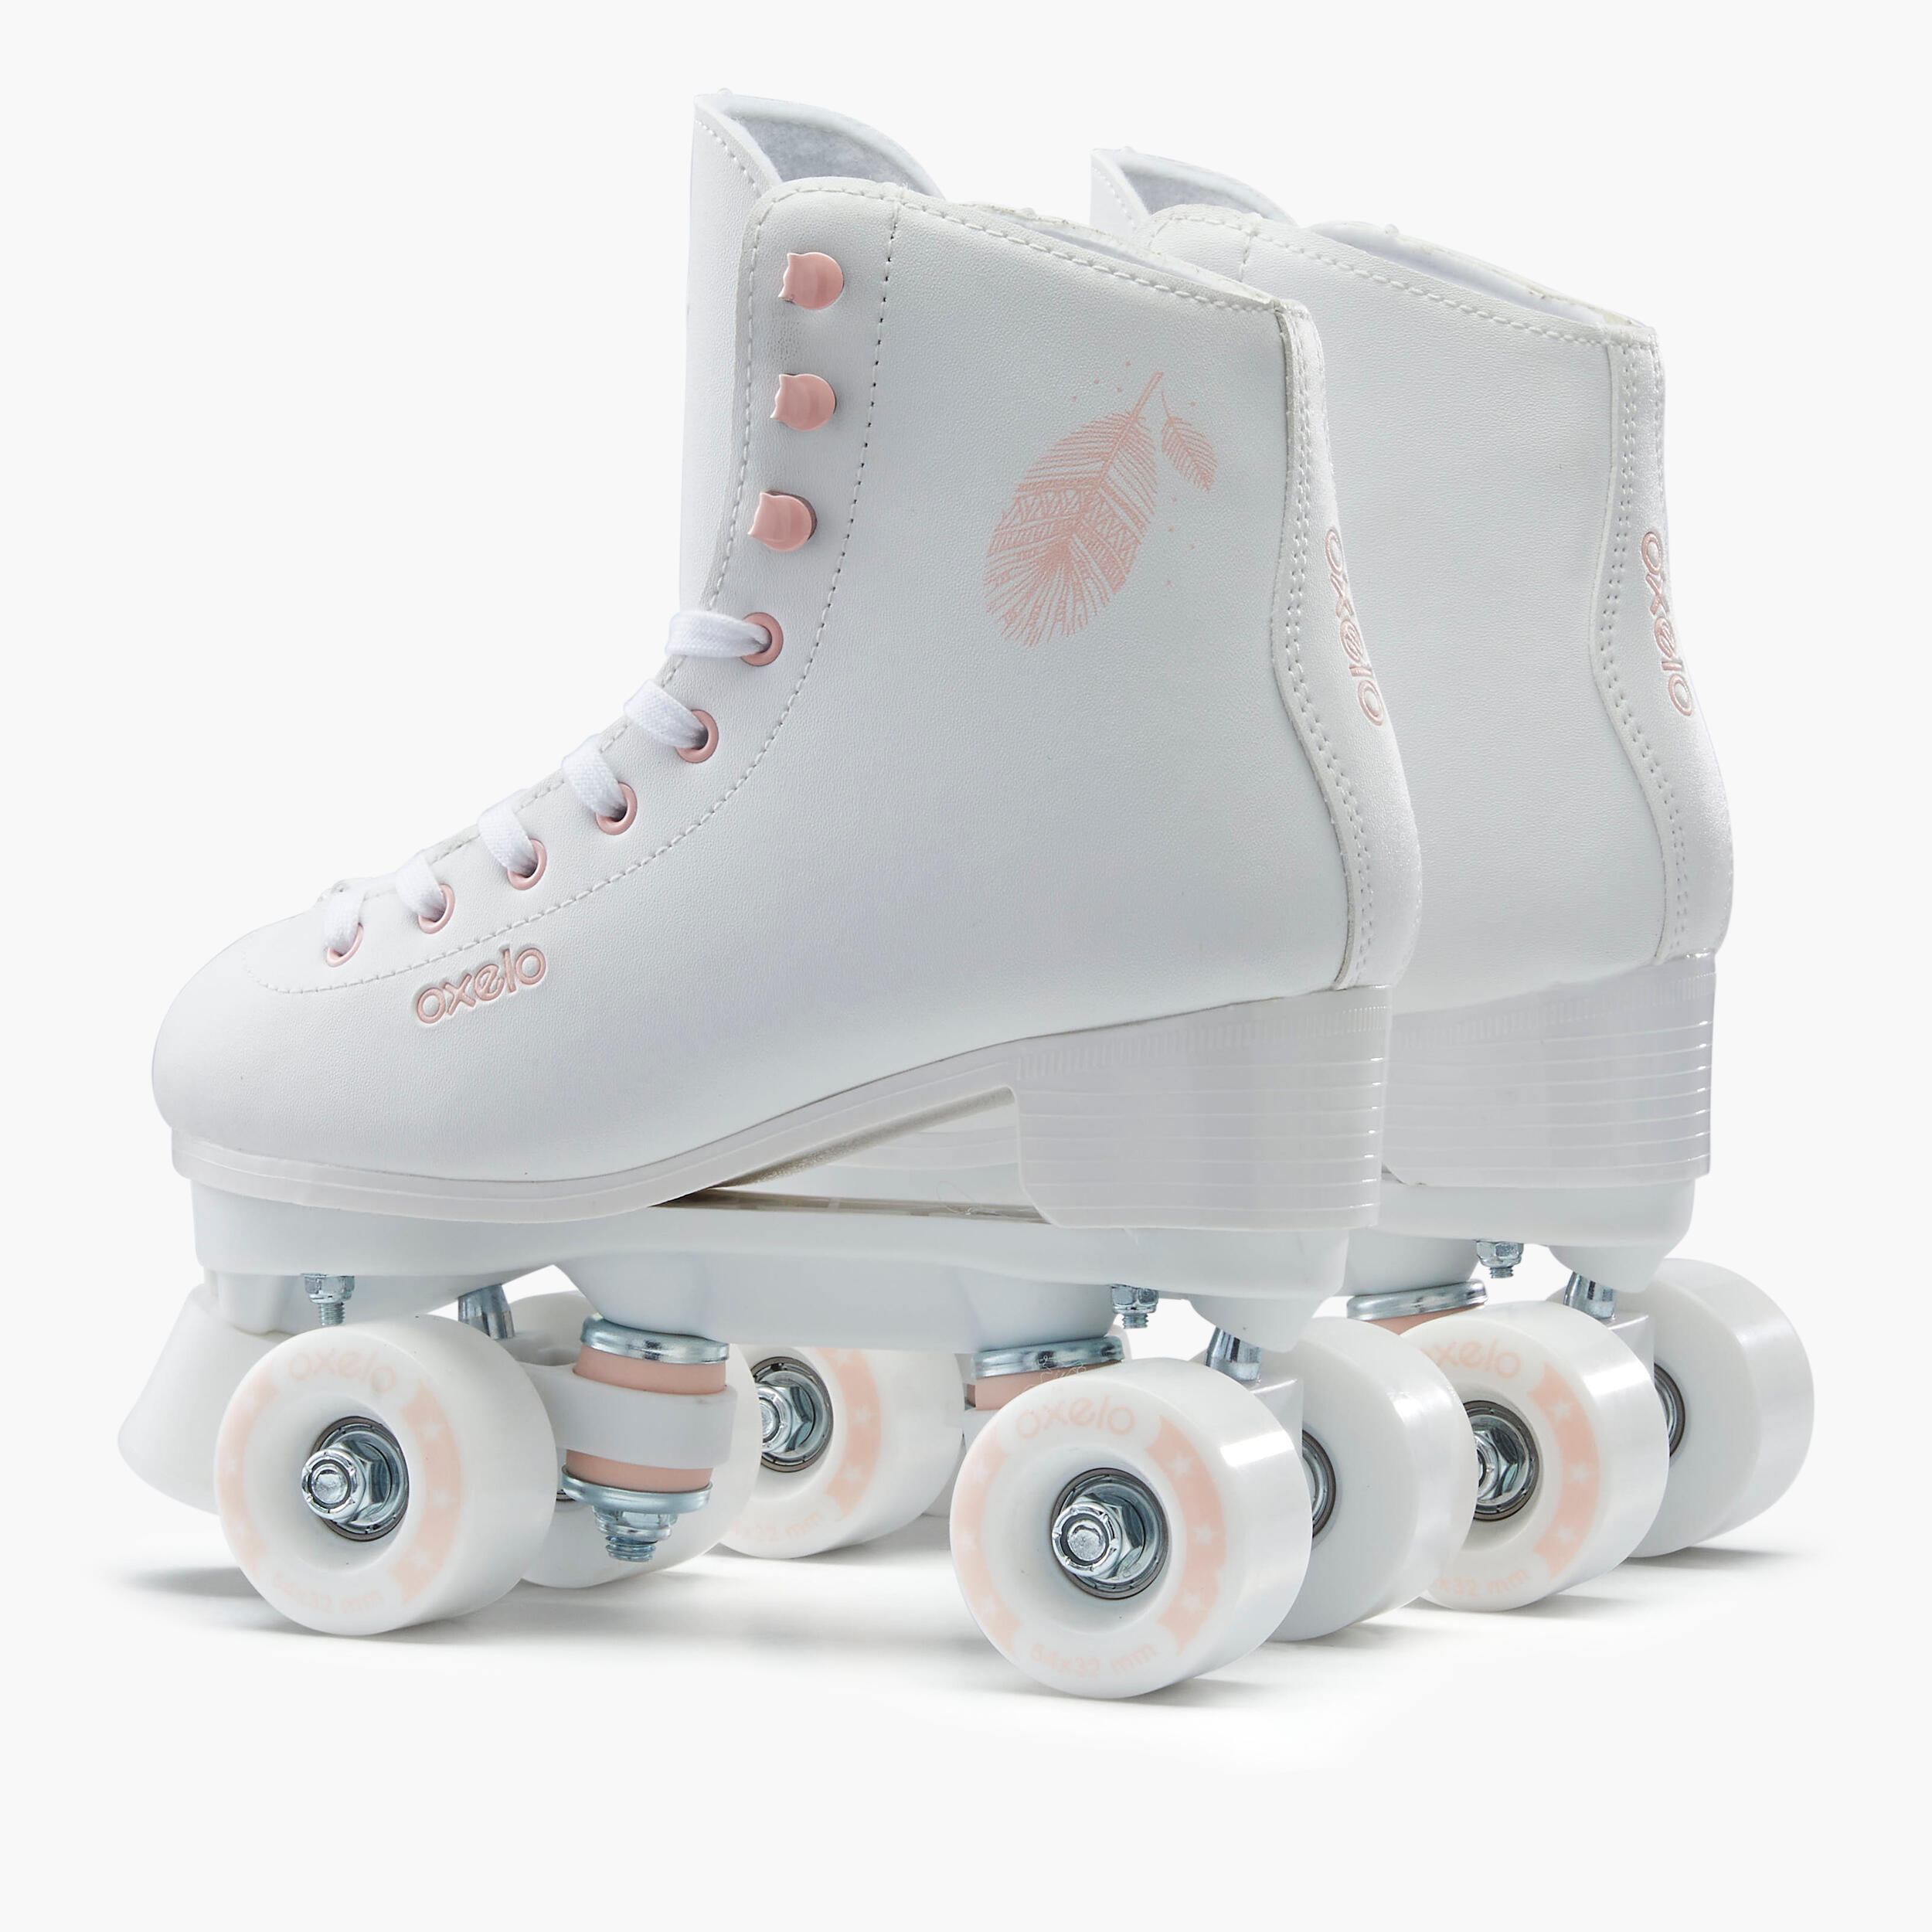 Kids' and Adult Artistic Roller Skating Quad Skates 100 - White 8/57